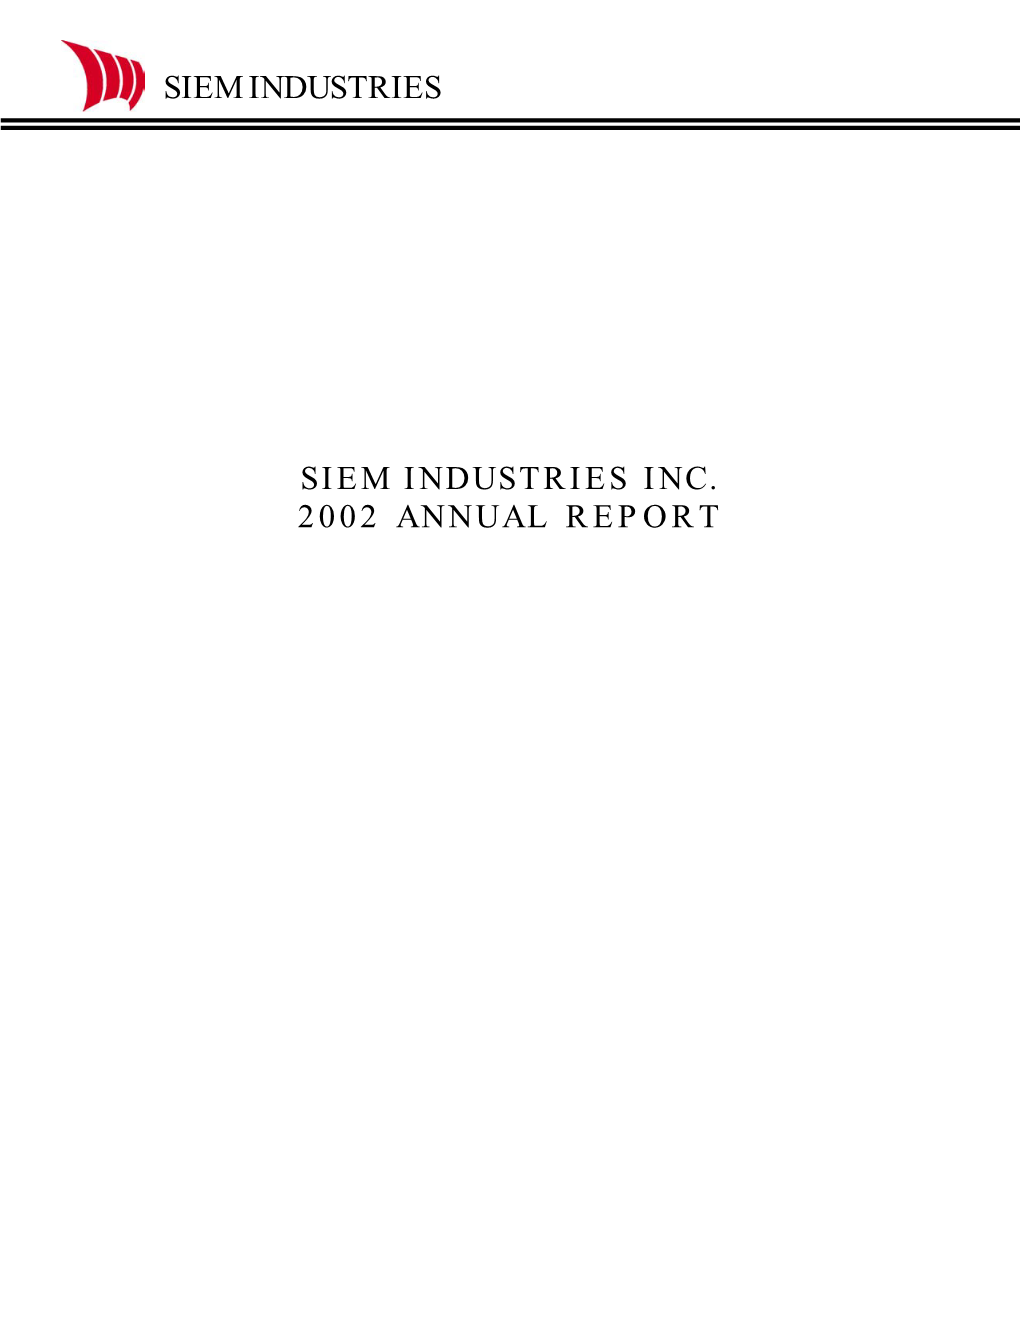 Siem Industries Inc. 2002 Annual Report